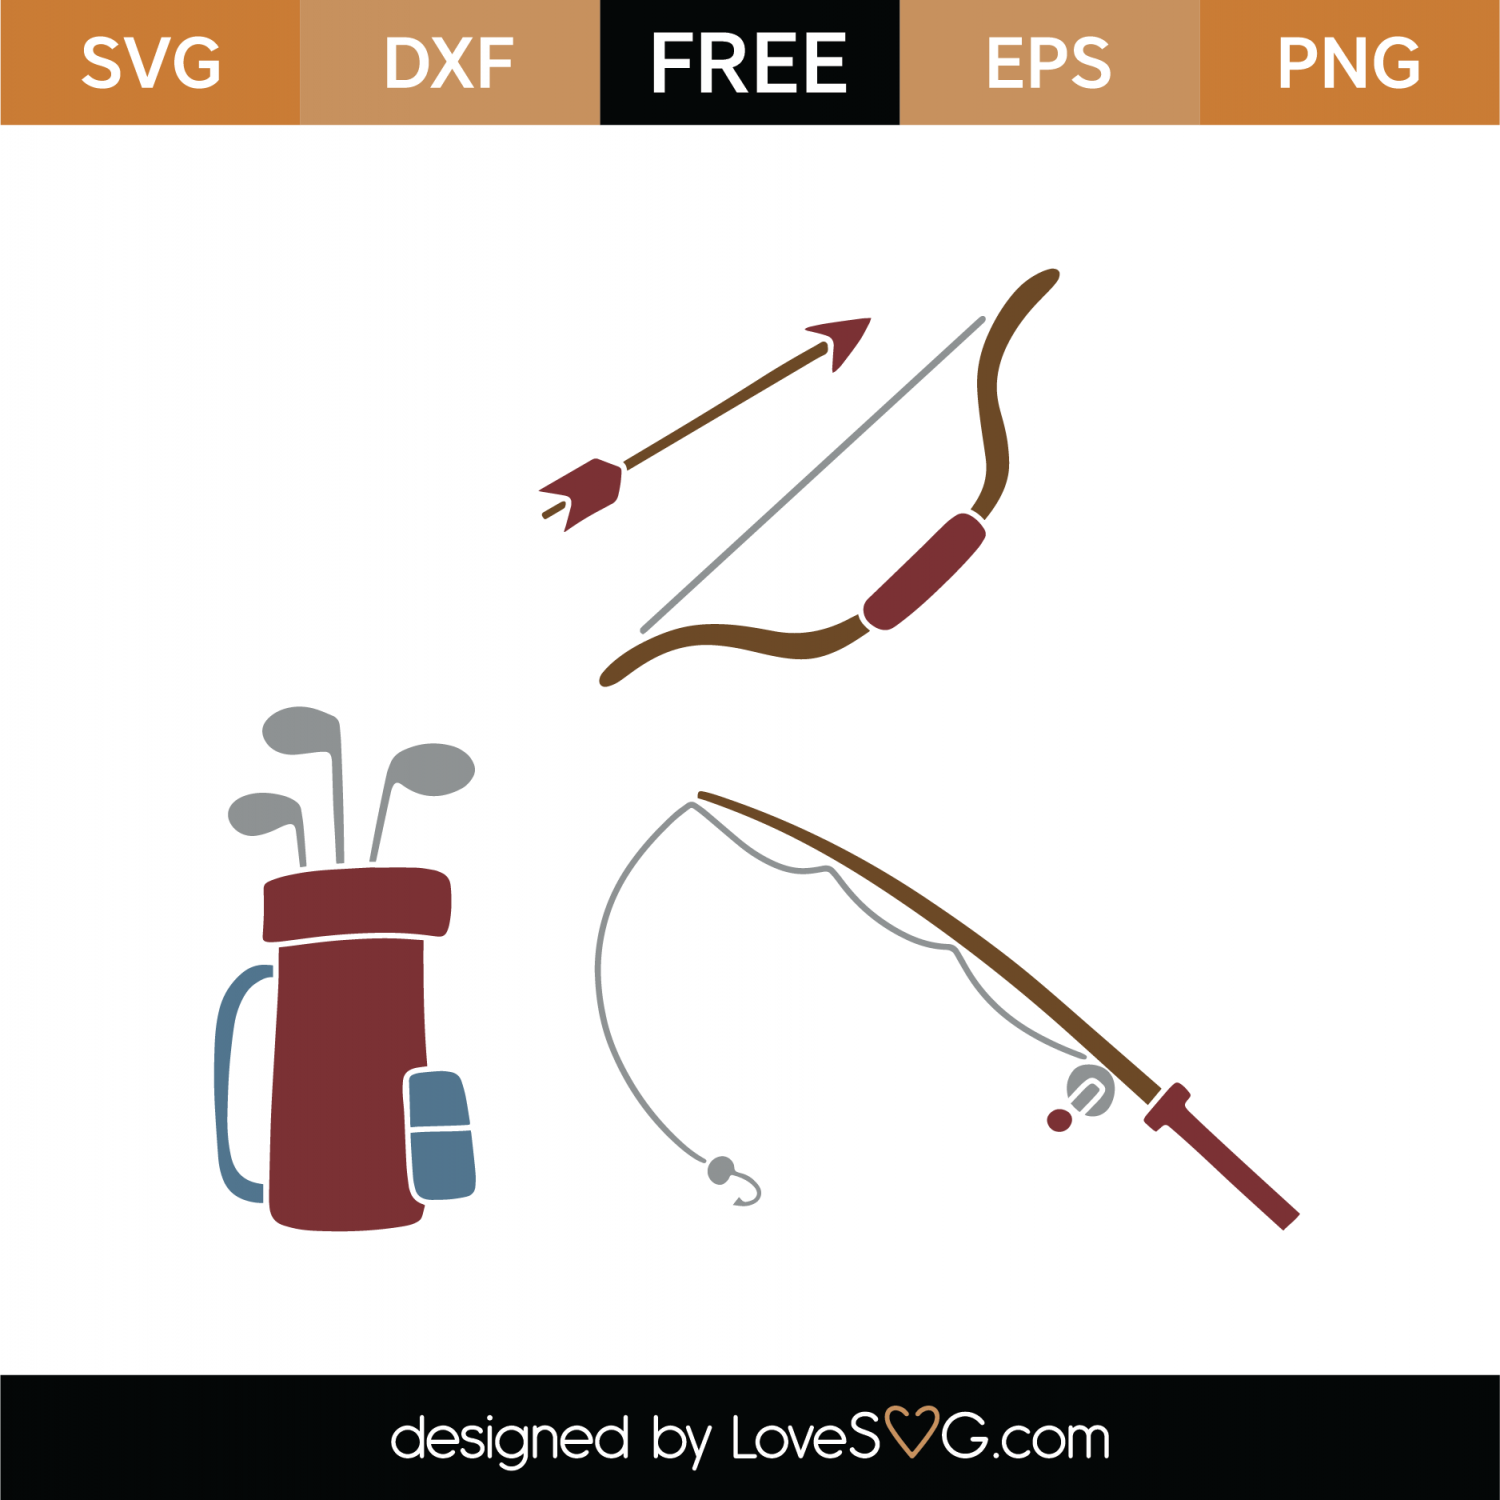 Free Fishing and Golf SVG Cut File | Lovesvg.com